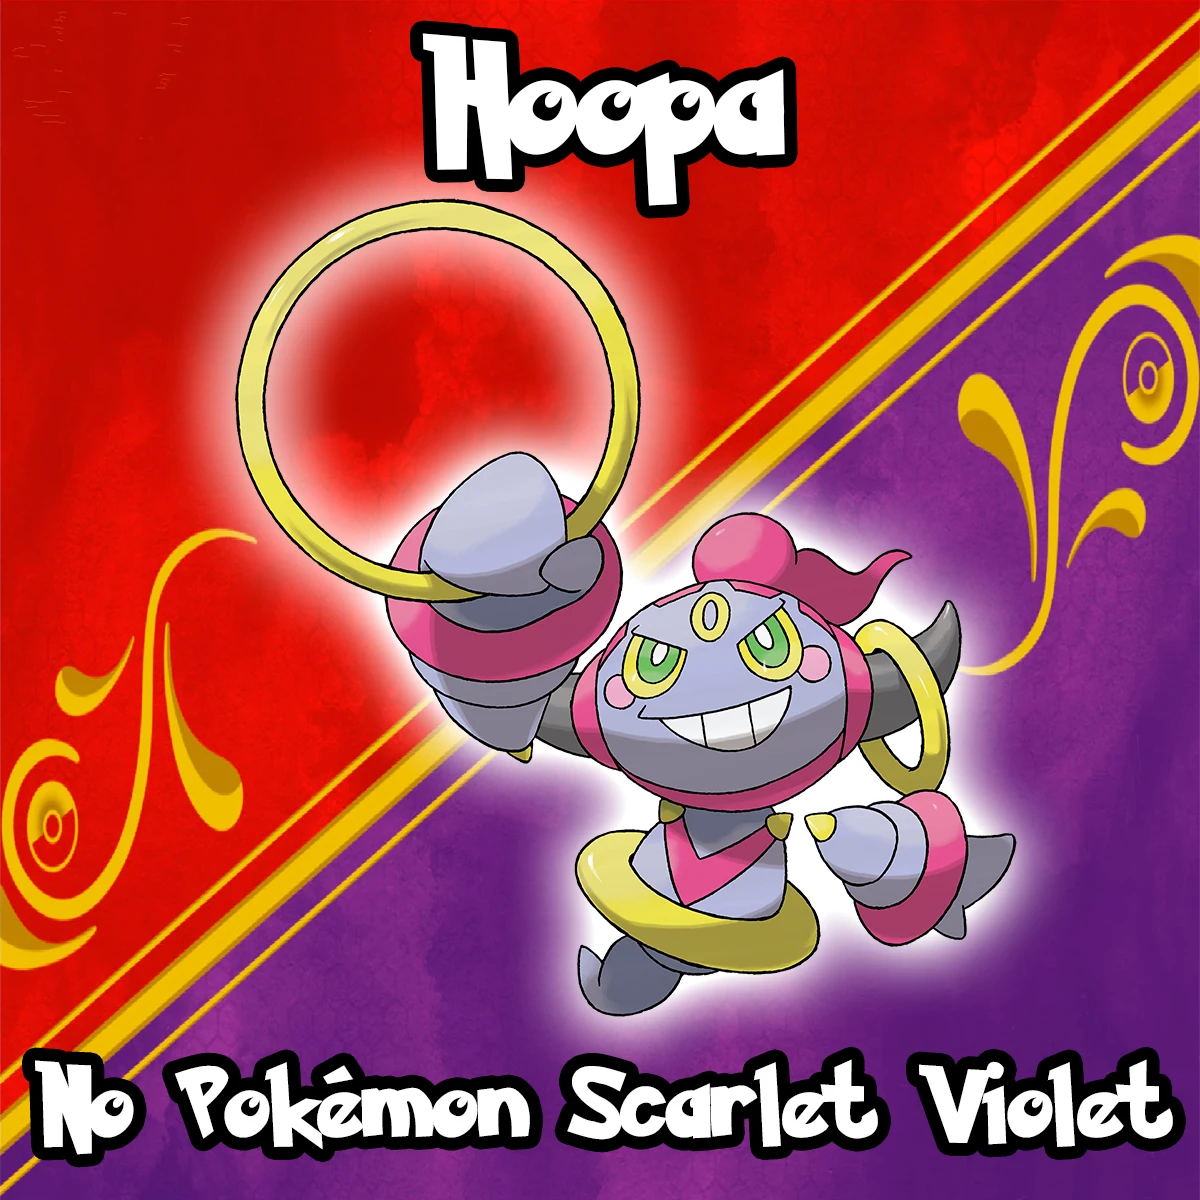 Meloetta Para Pokémon Scarlet E Violet - Outros - DFG